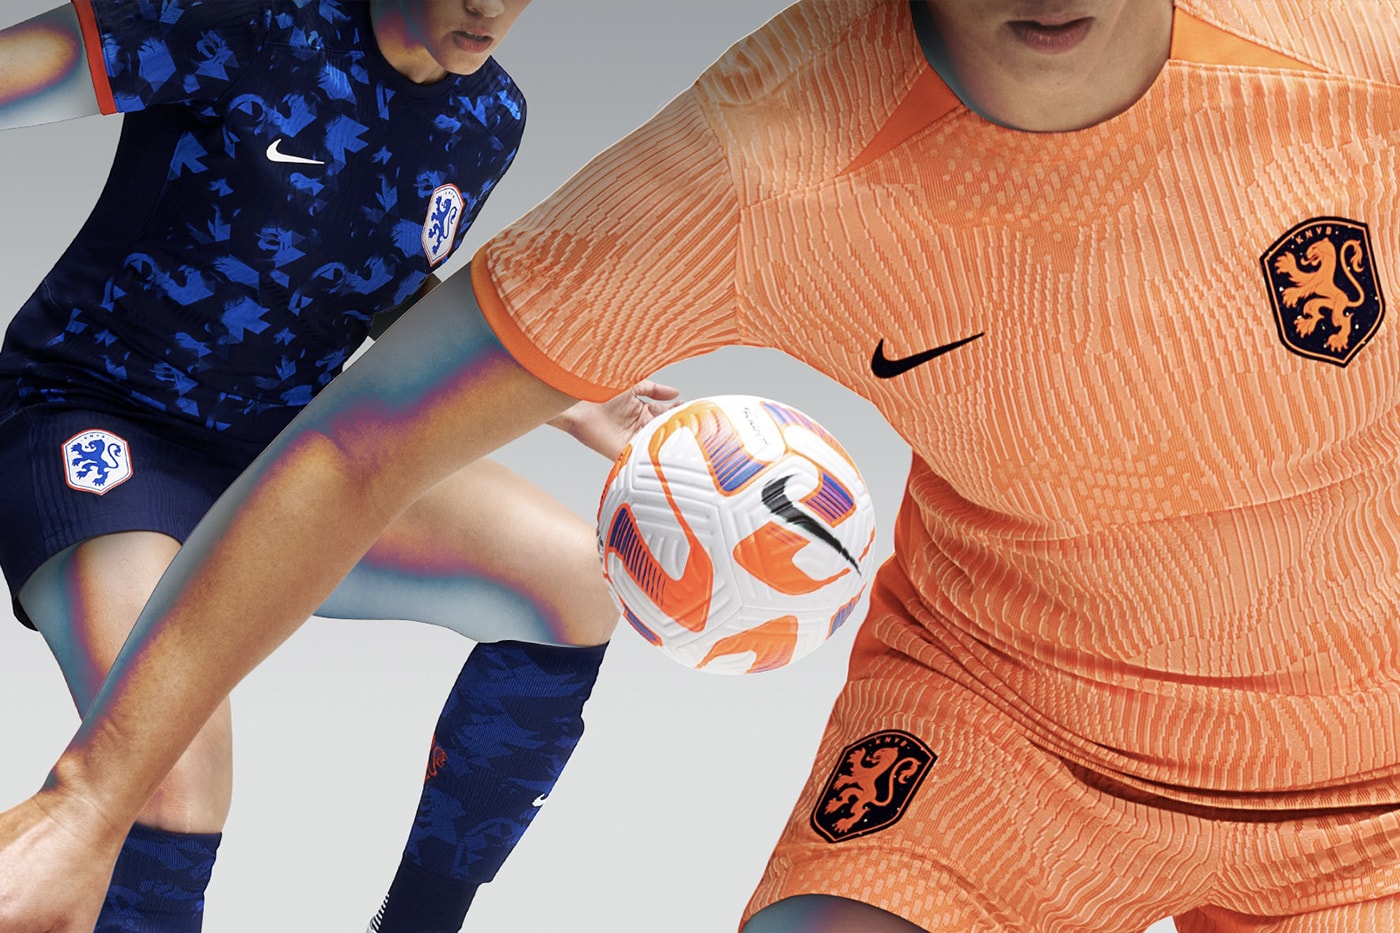 Nike KNVB Pitch Football Ball Orange